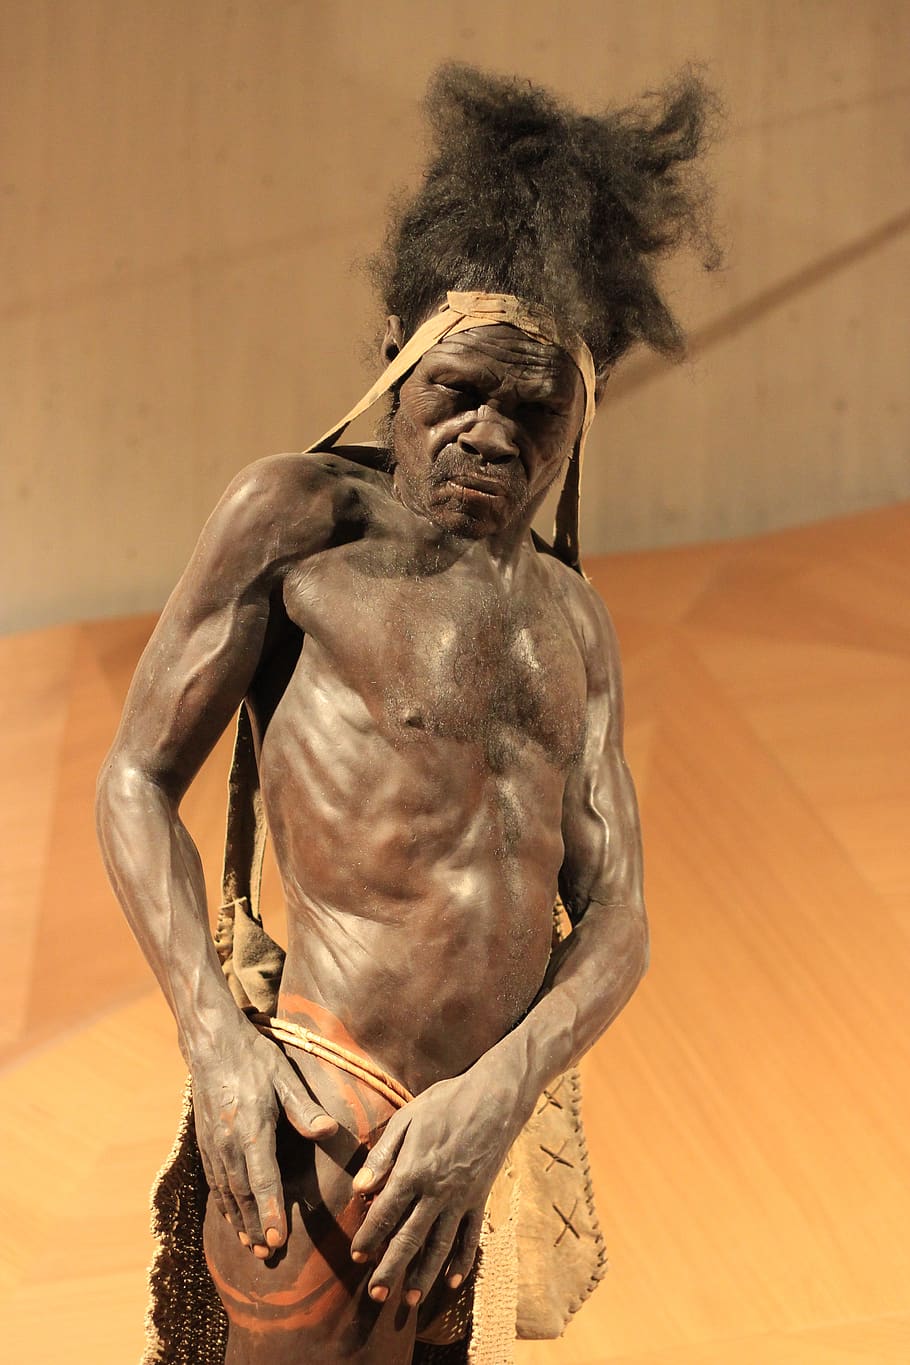 neanderthal, stone age, caveman, museum, figure, shirtless, males, indoors, emotion, adult